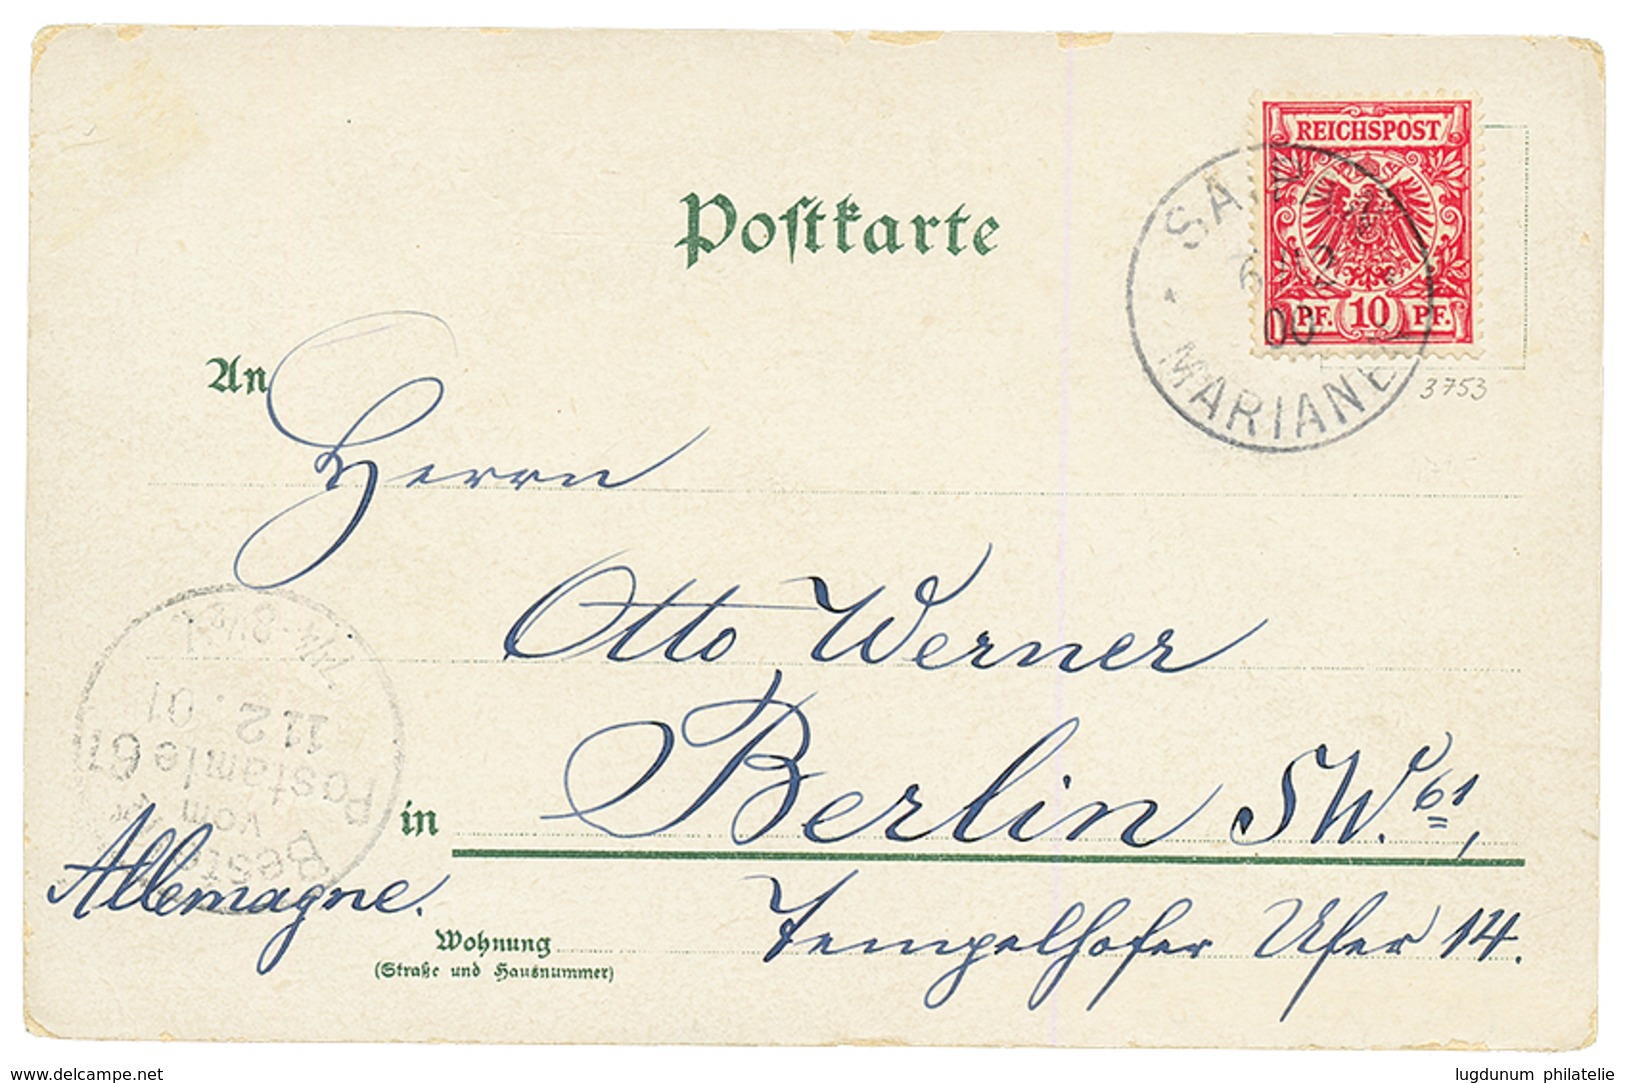 MARIANES - VORLAUFER : 1900 10pf Canc. SAIPAN MARIANEN On Card To BERLIN With Arrival Cds. RARE. Vf. - Mariannes